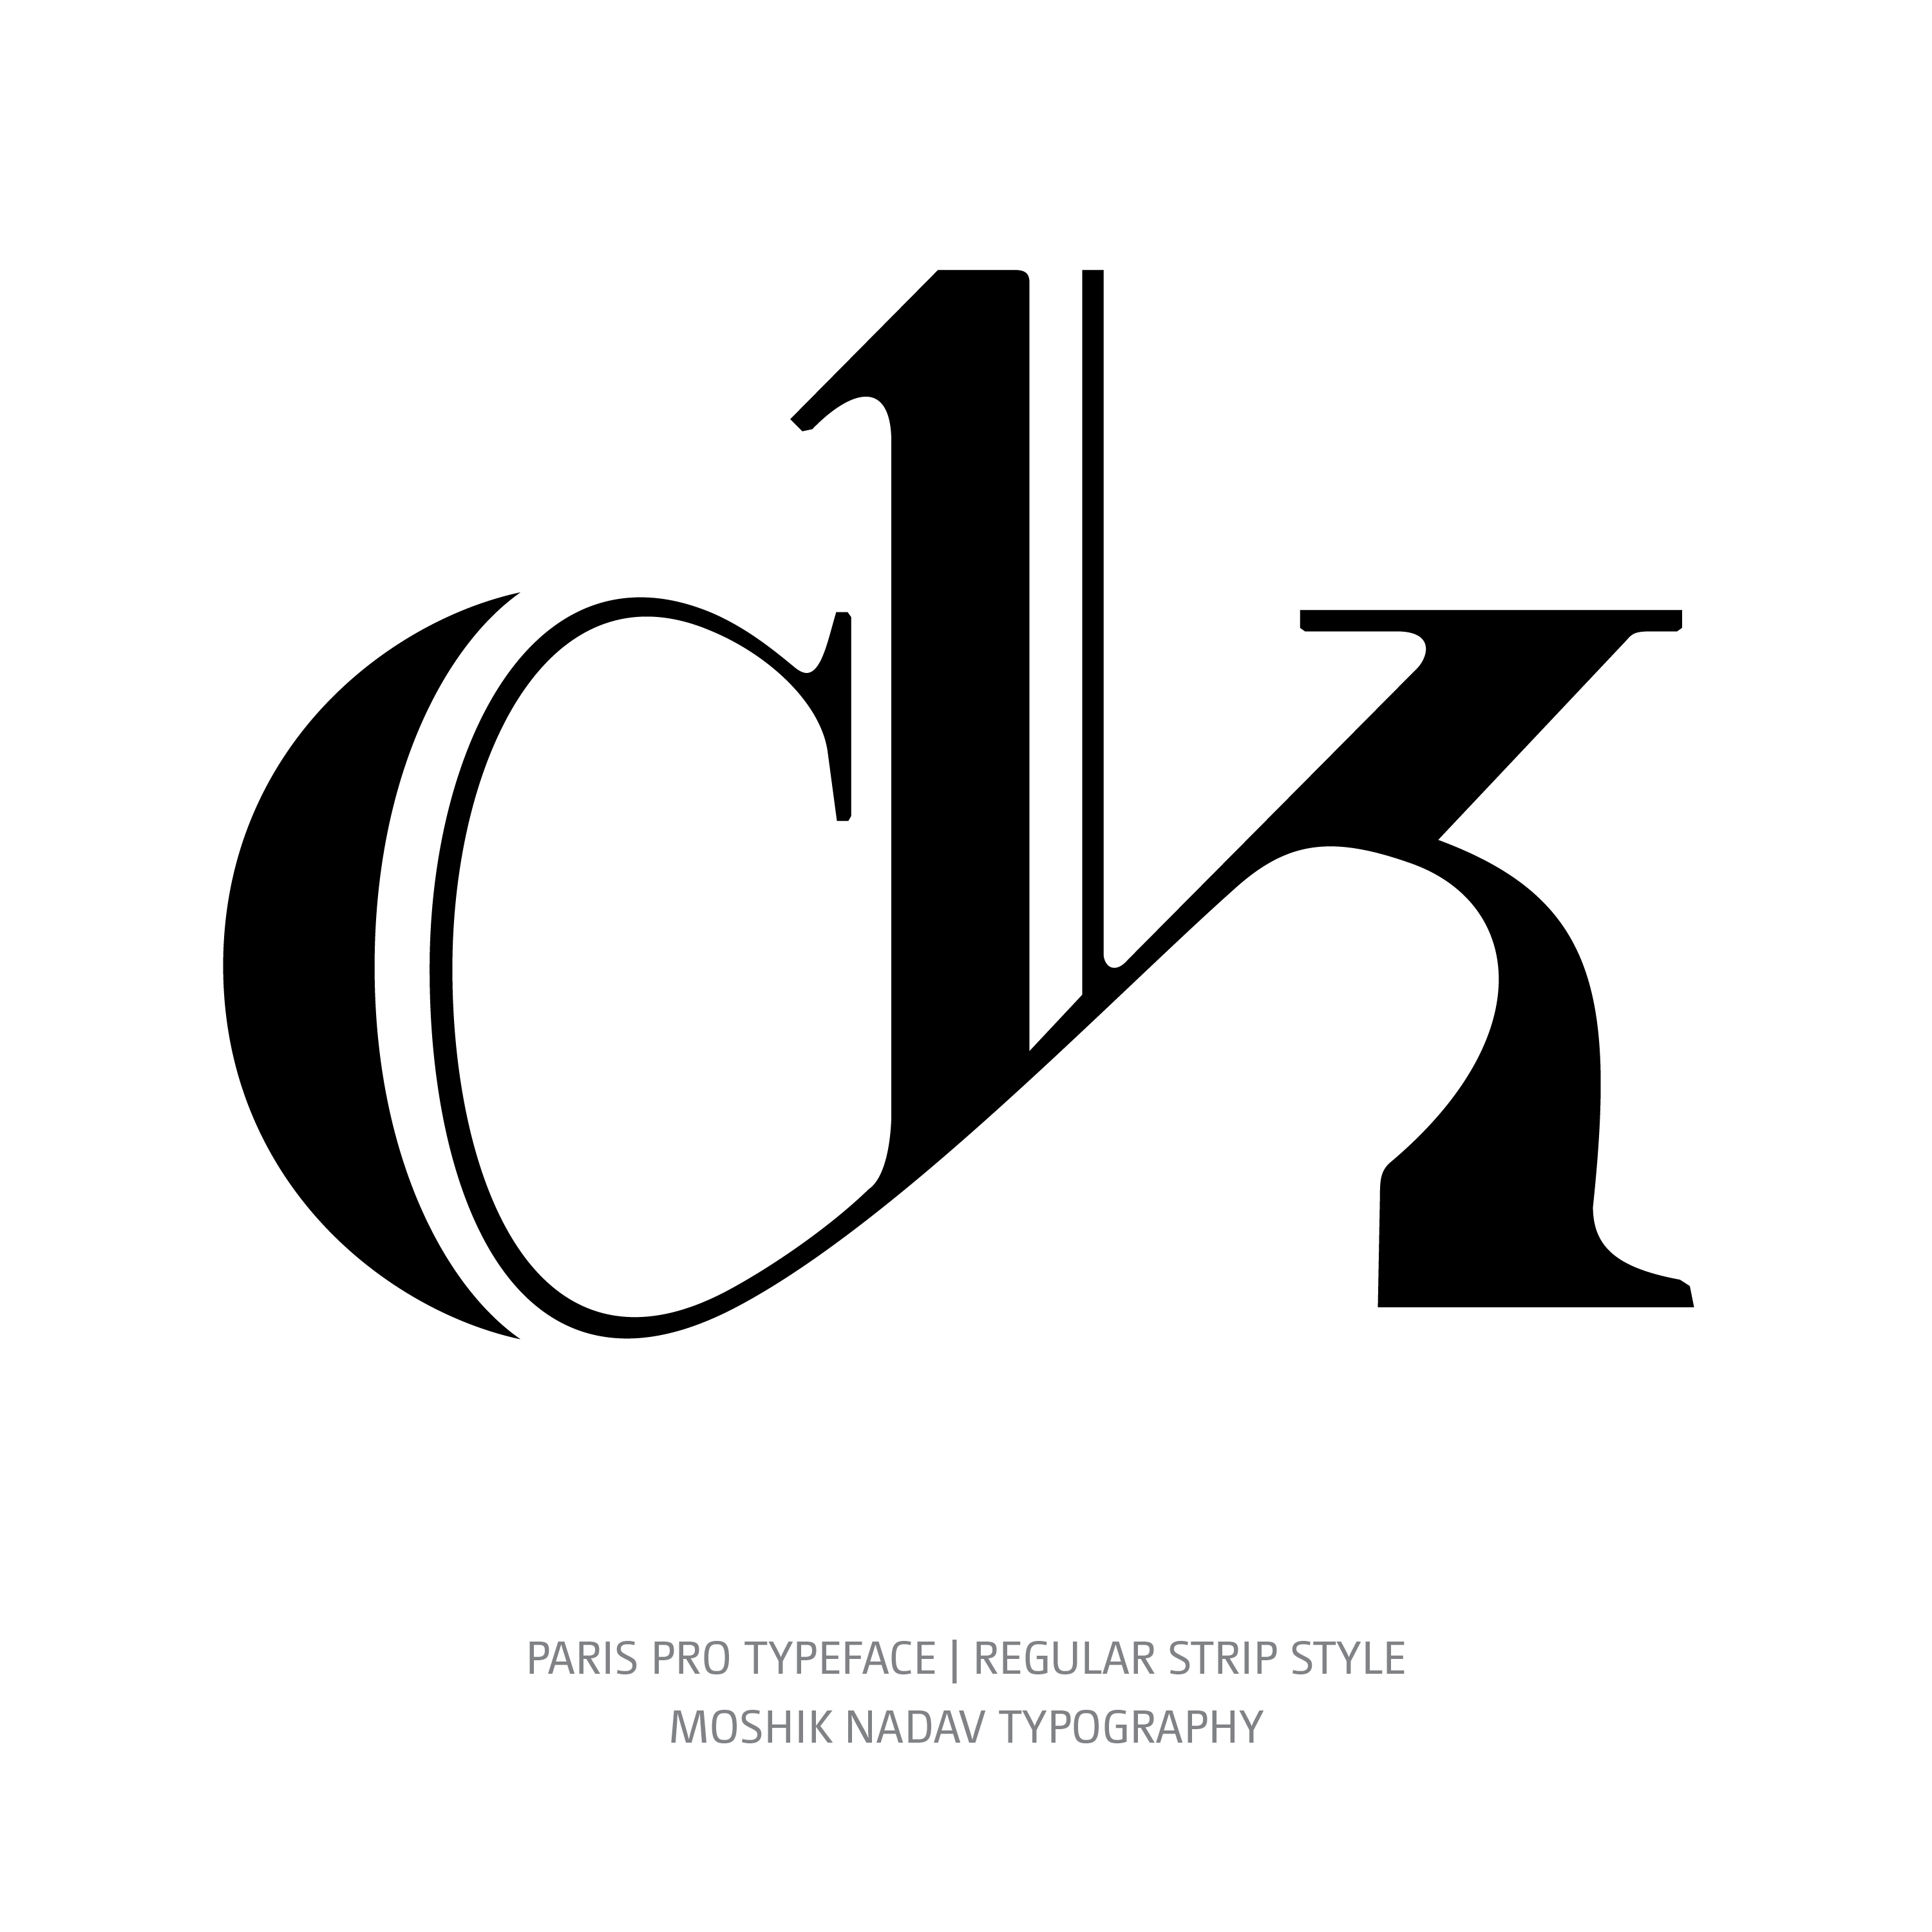 Paris Pro Typeface Regular Strip ck ligature